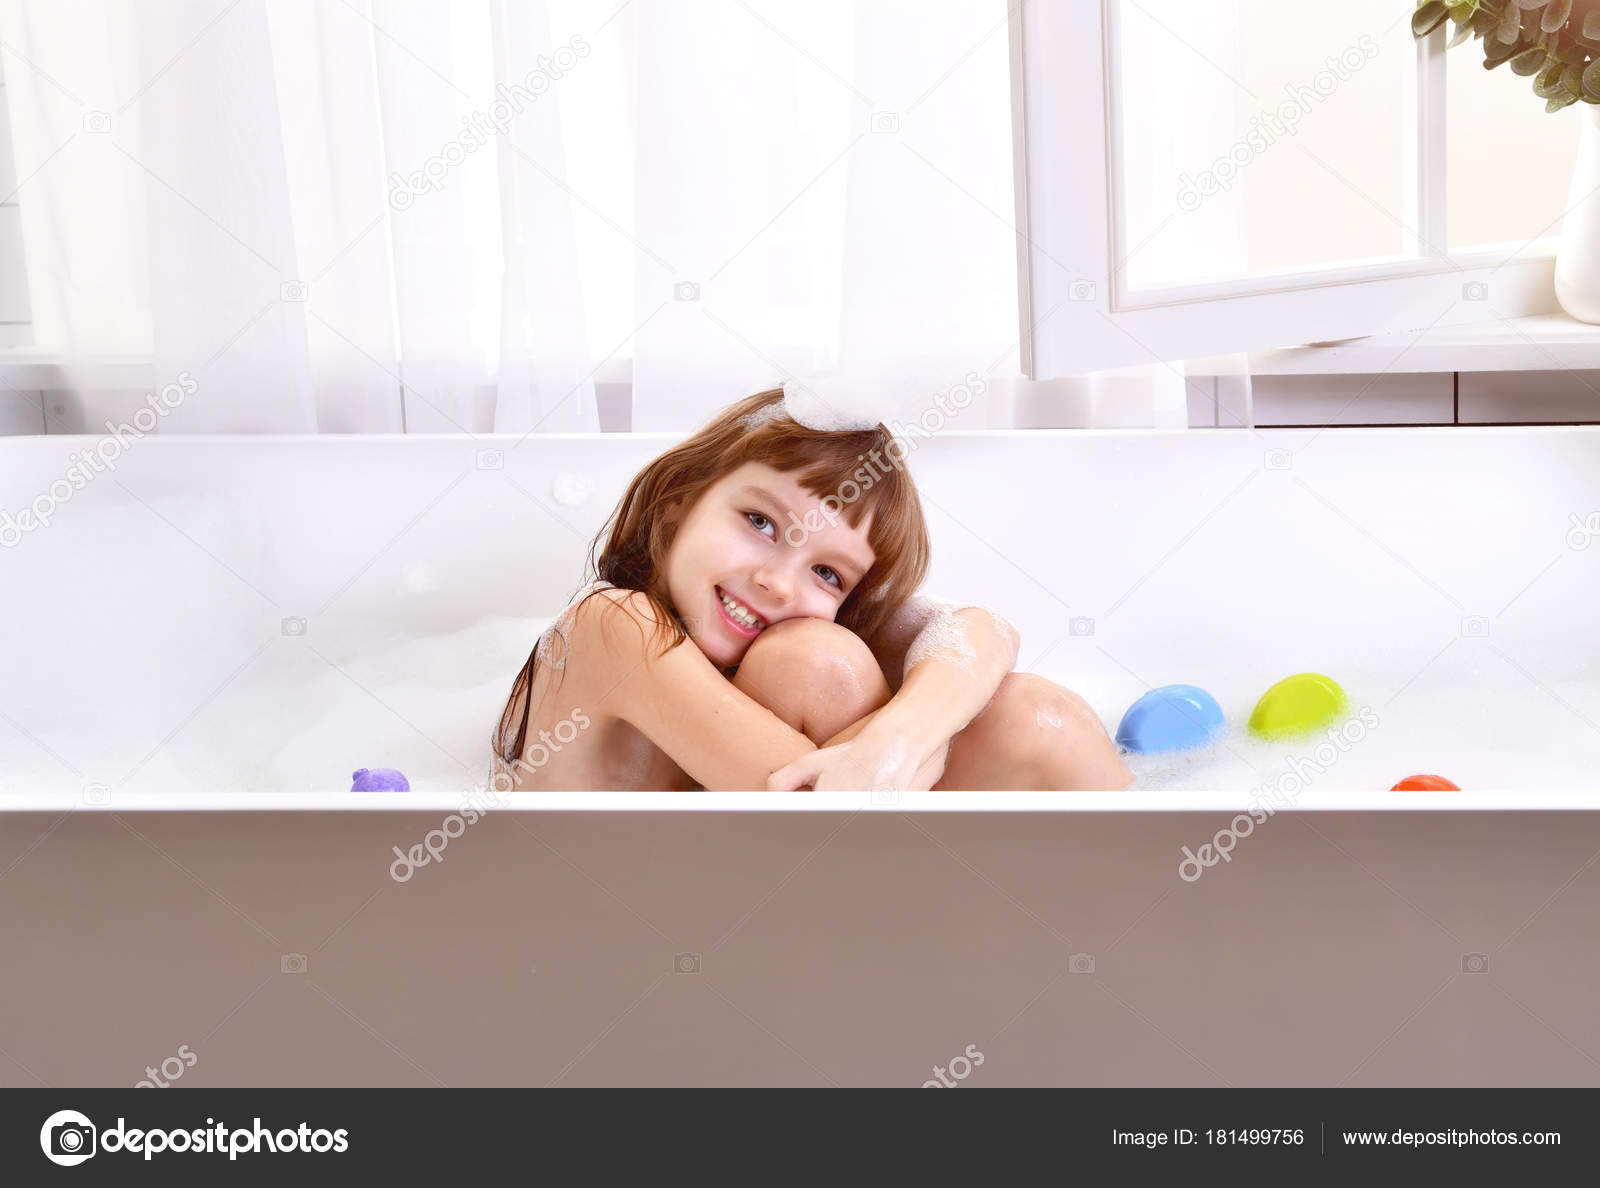 Happy Little Baby Girl Kid Sitting In Bath Tub In The